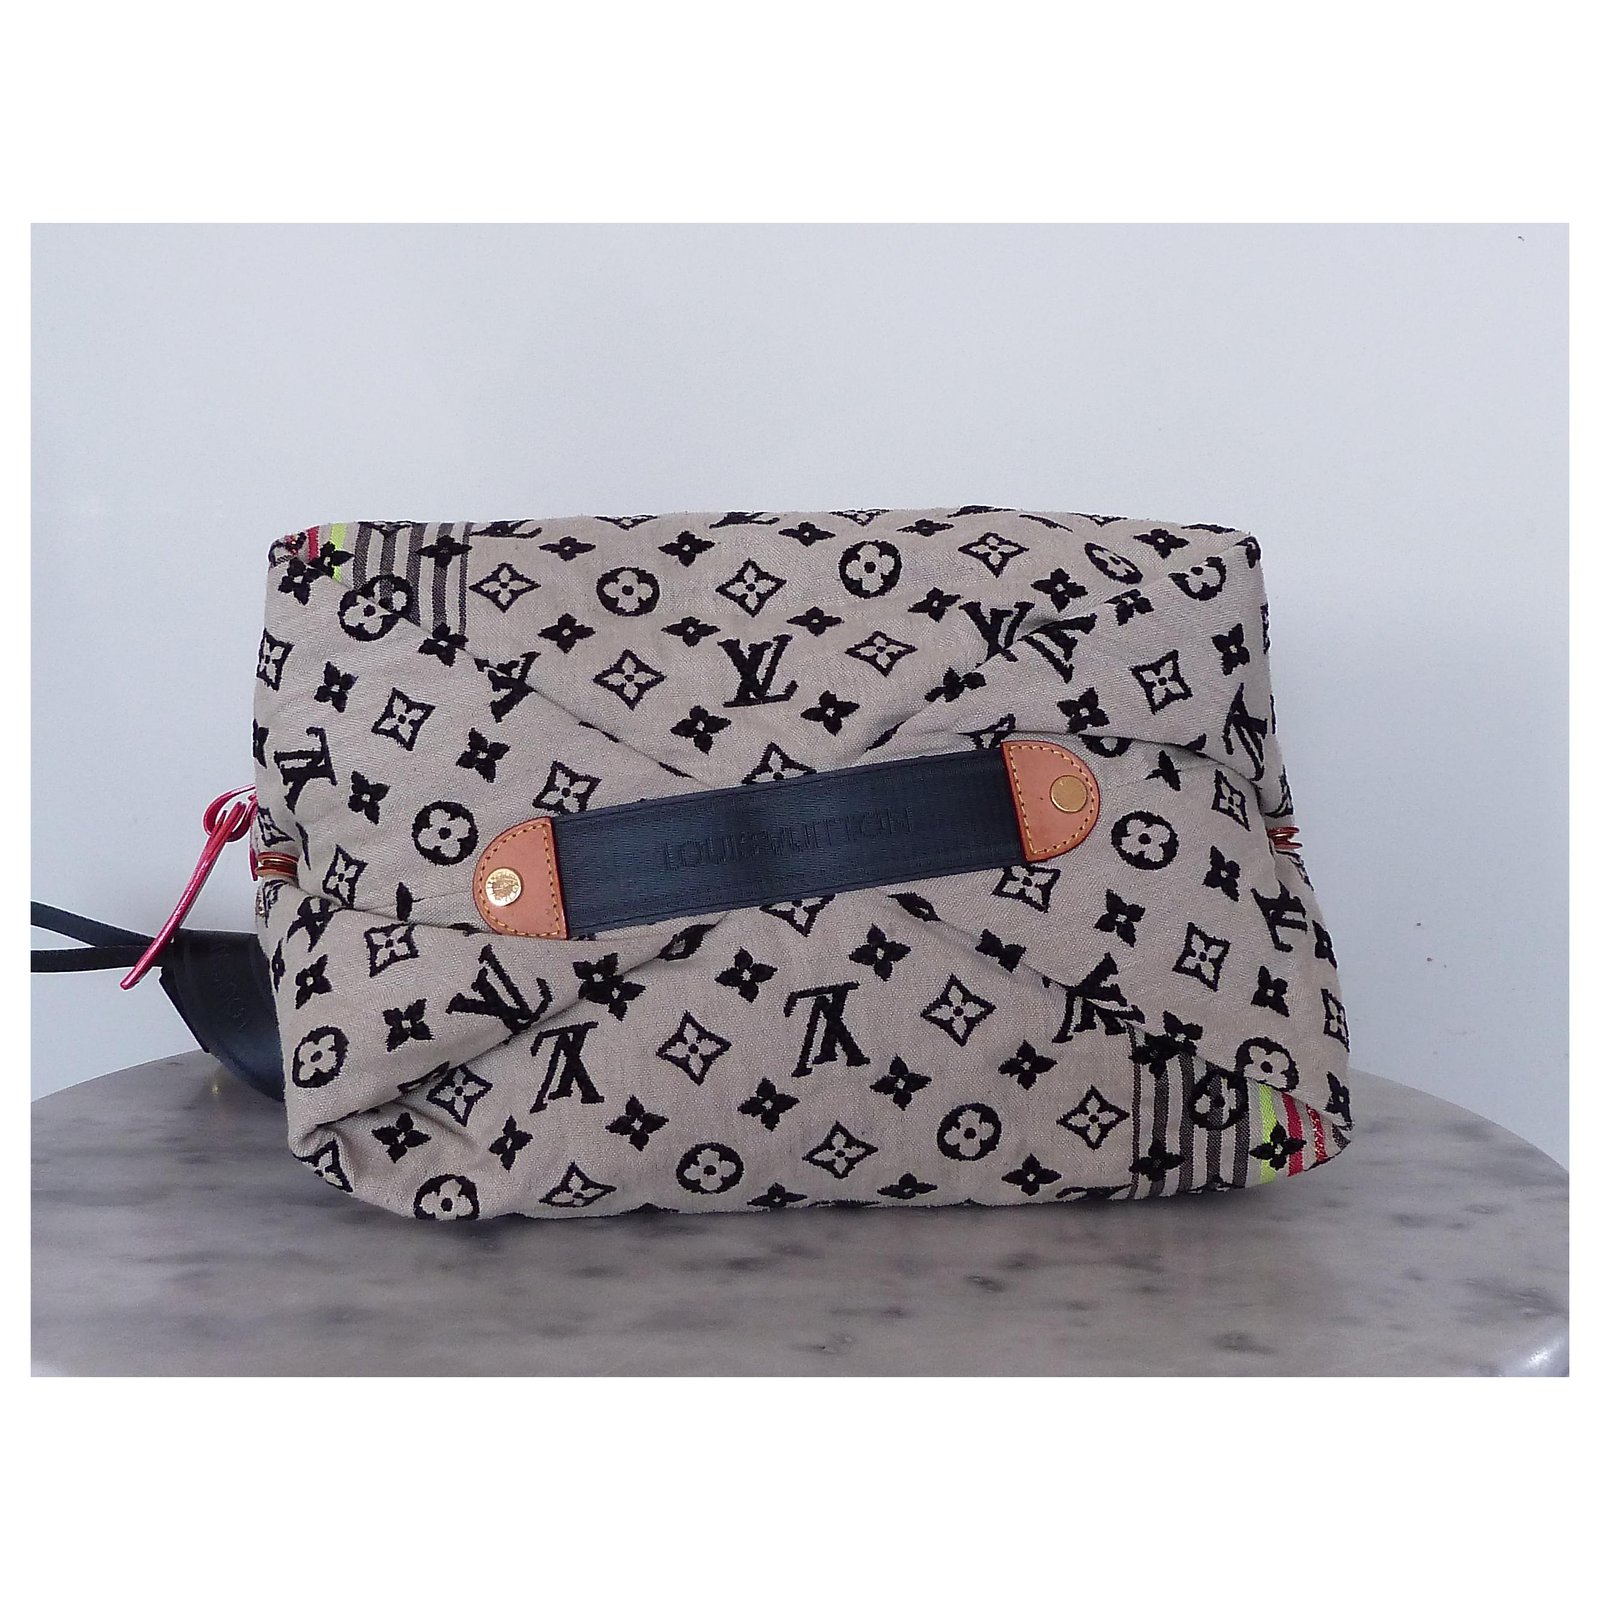 Louis Vuitton Women's Limited Edition 2010 Cheche Bohemian Bag at